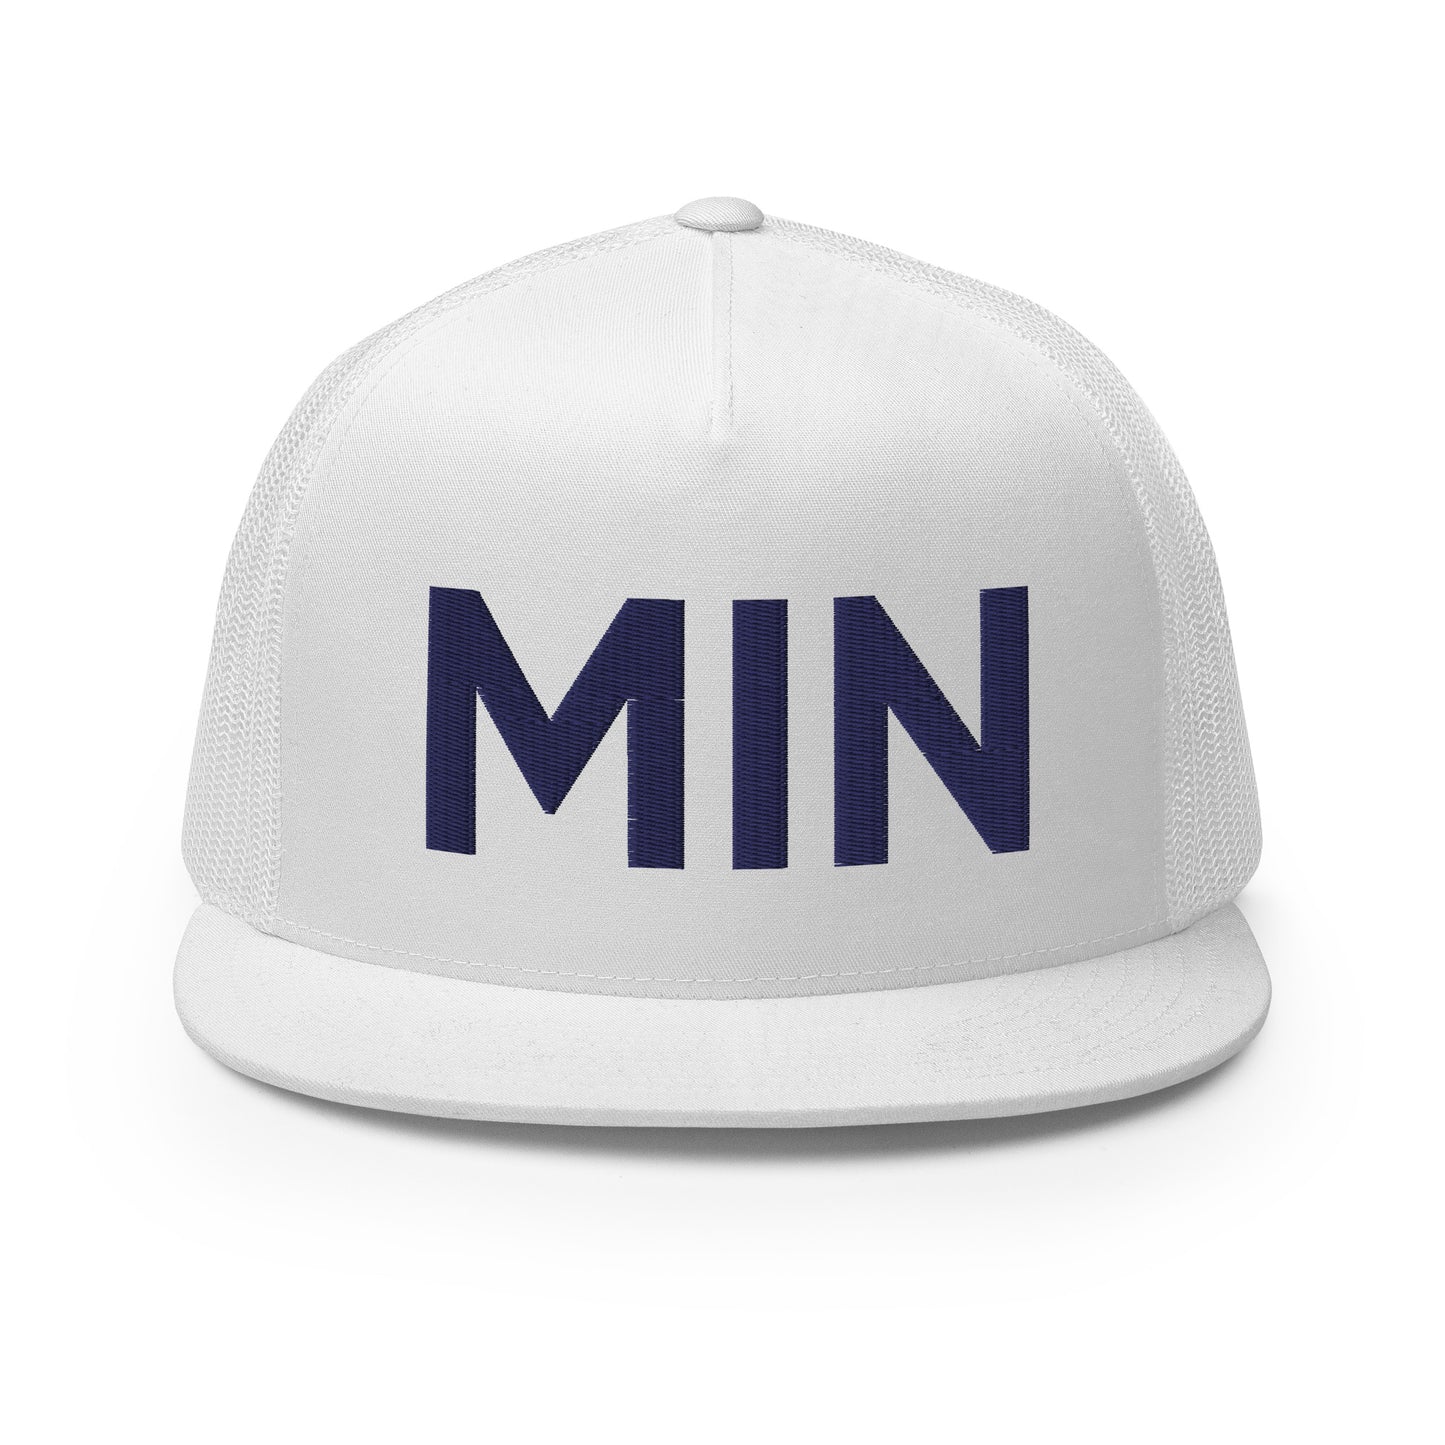 MIN Minneapolis Trucker Hat